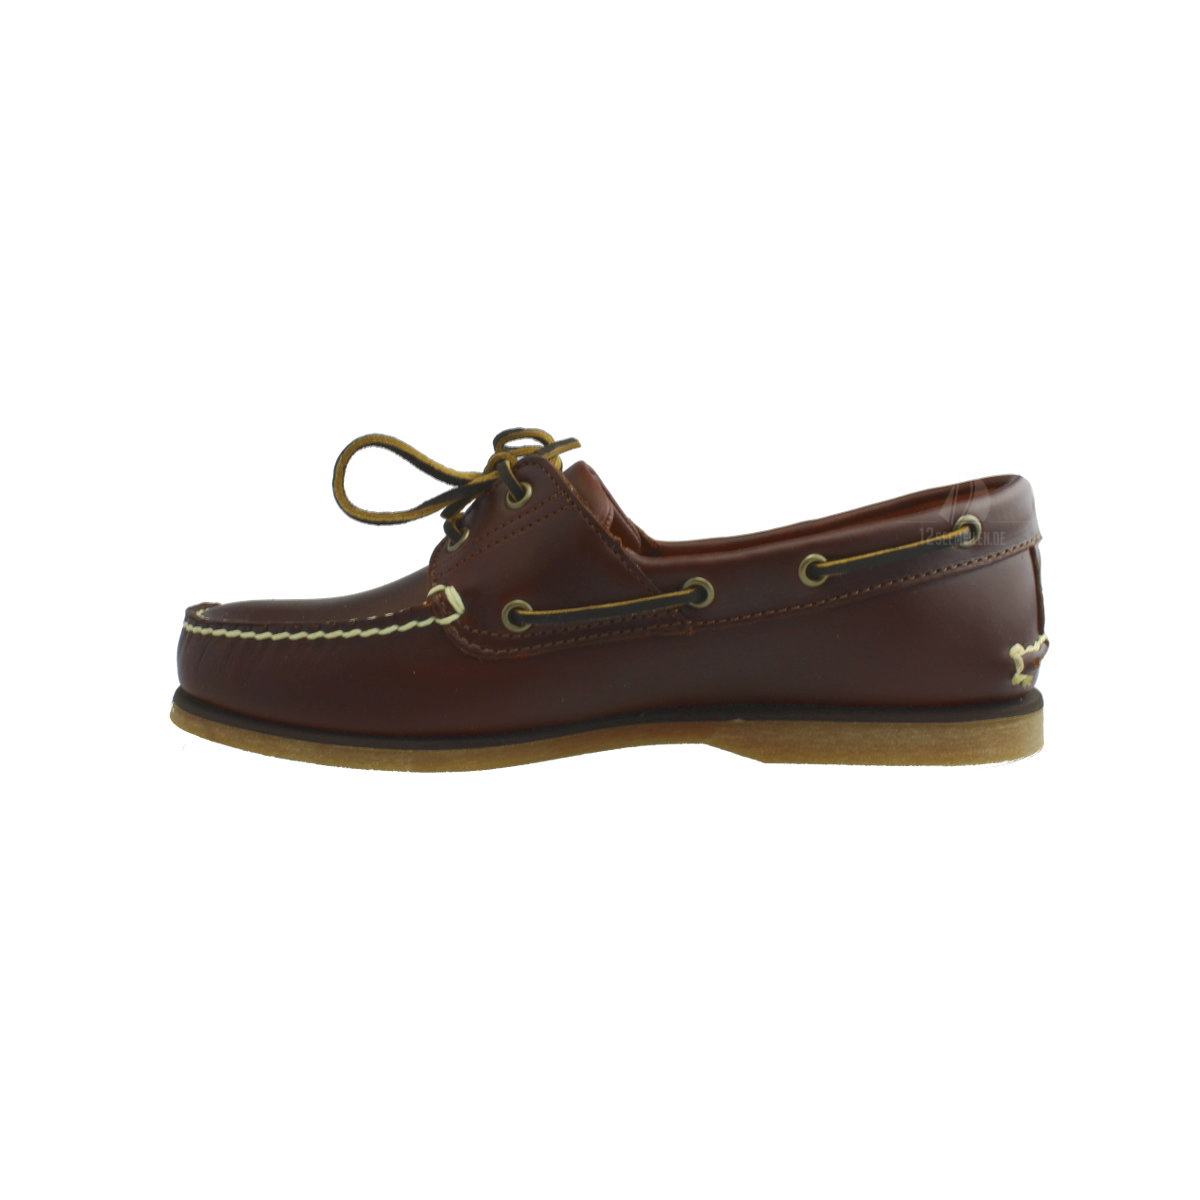 Timberland Classic Boat chaussures bateau Hommes brun - rouge eu 43 ( us 9 )